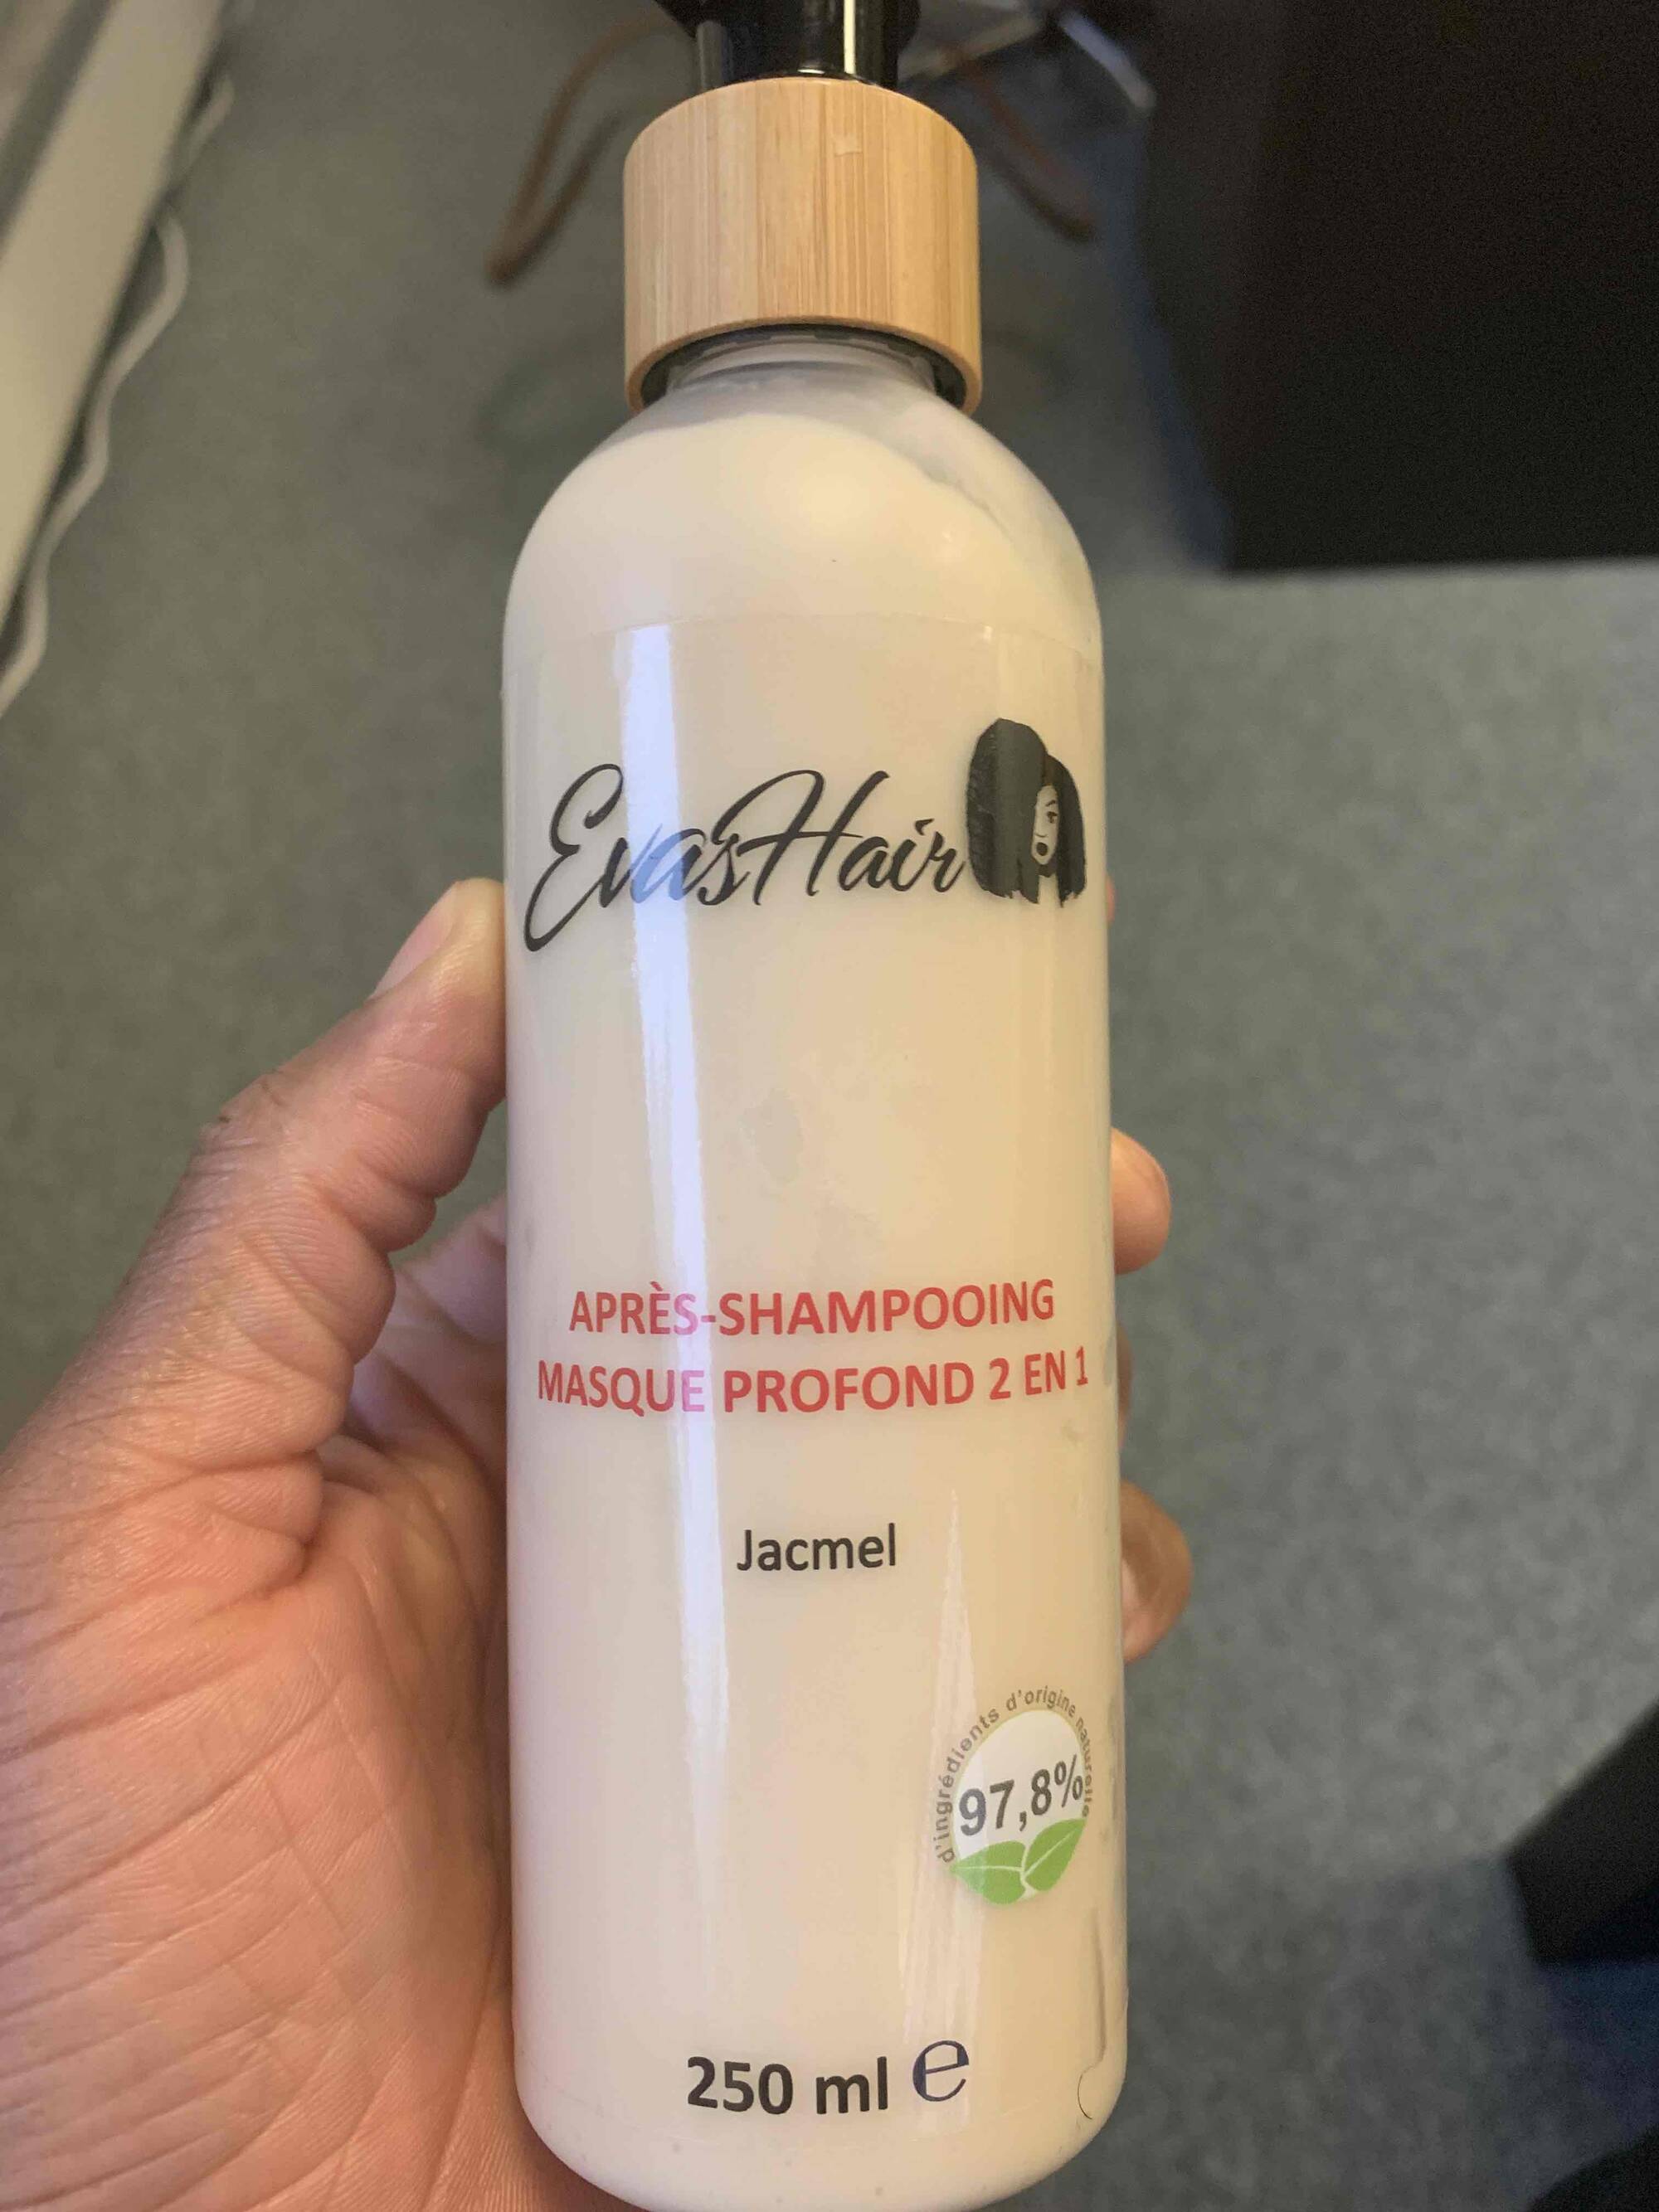 EVAS HAIR - Jacmel - Après-shampooing masque profond 2 en 1